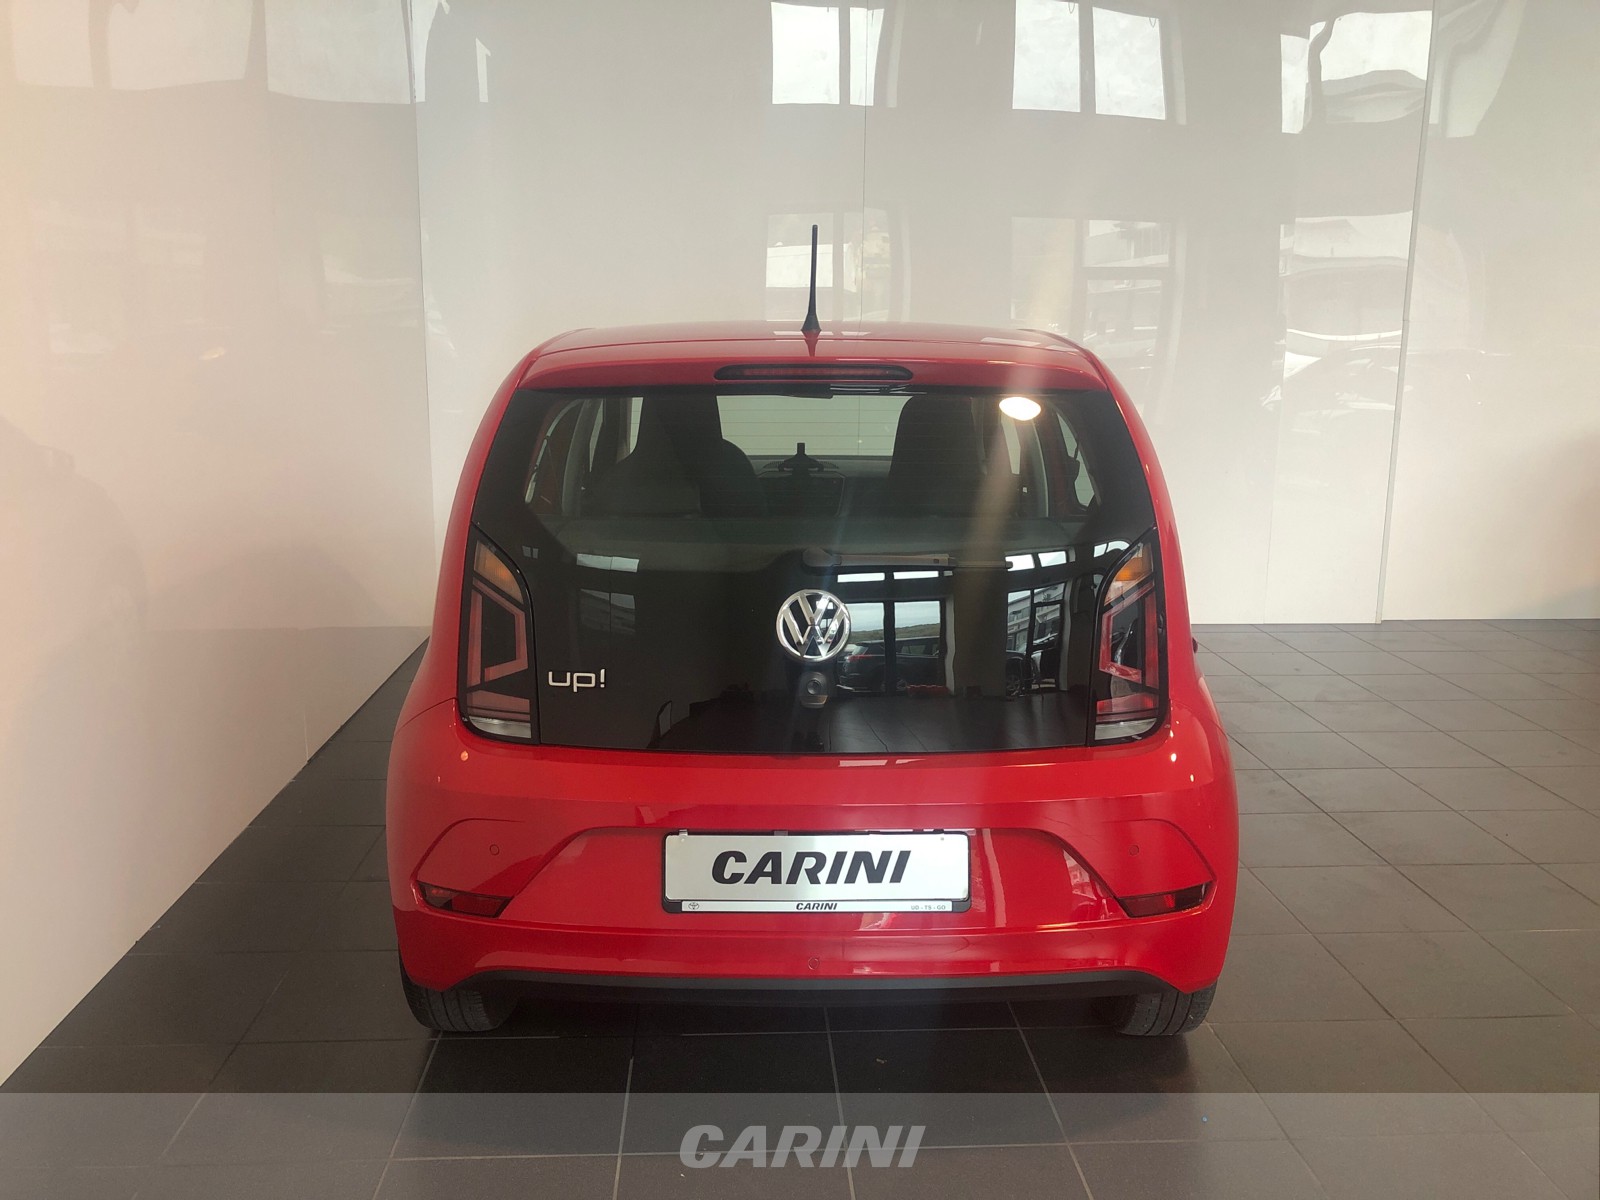 CARINI Volkswagen up!